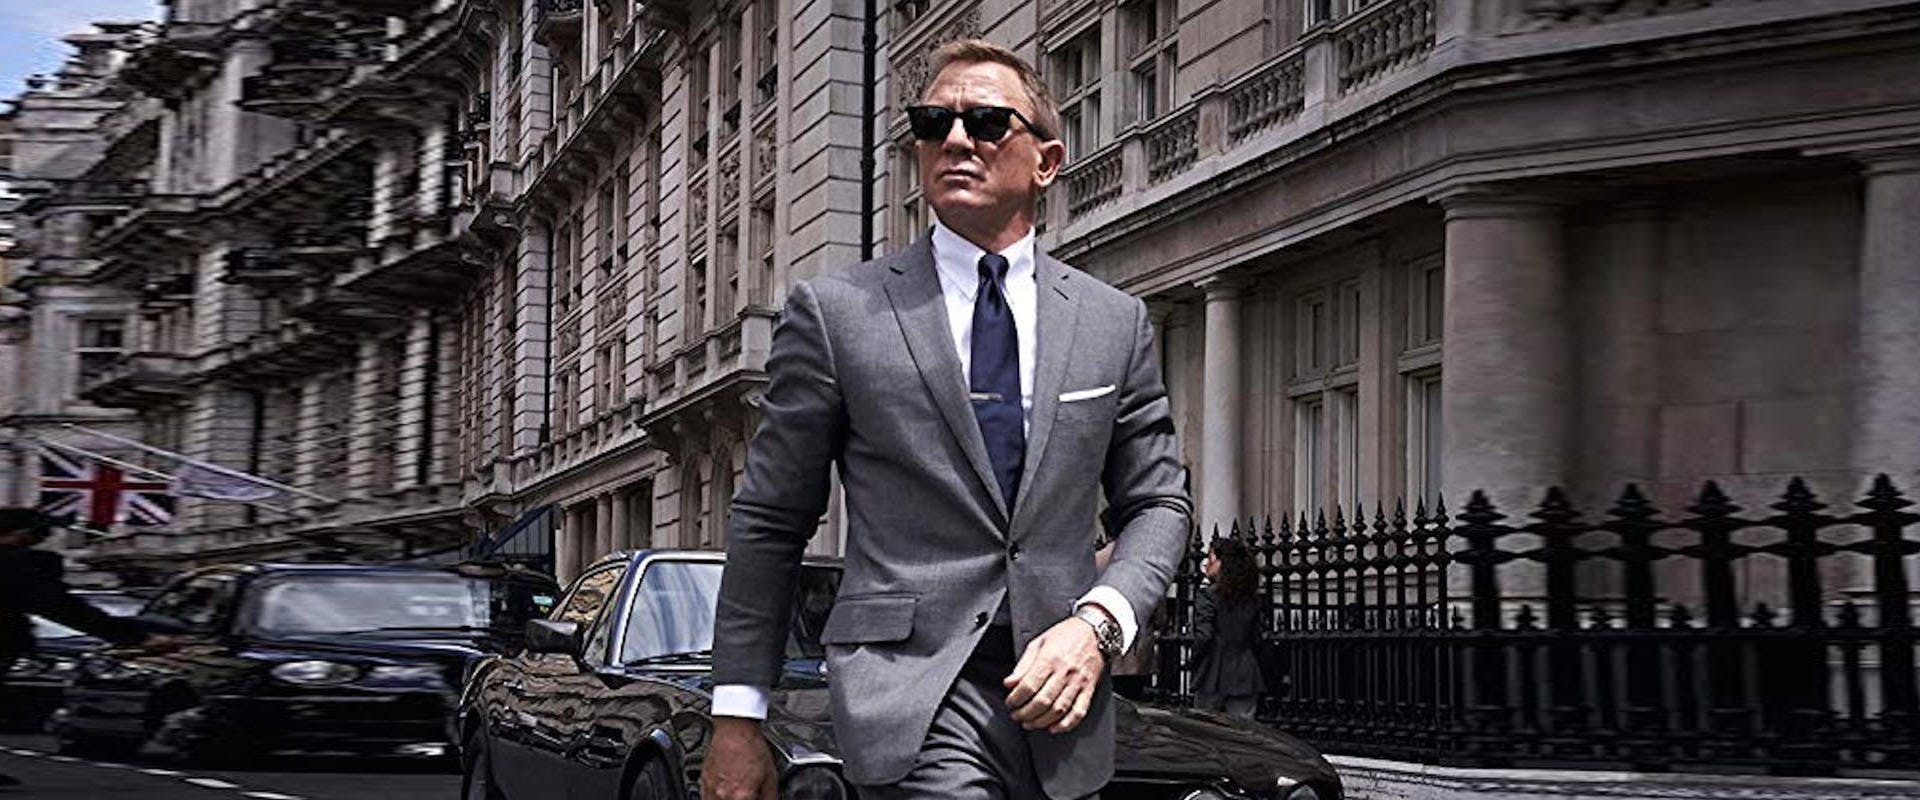 clothing suit overcoat coat tie accessories sunglasses person man car